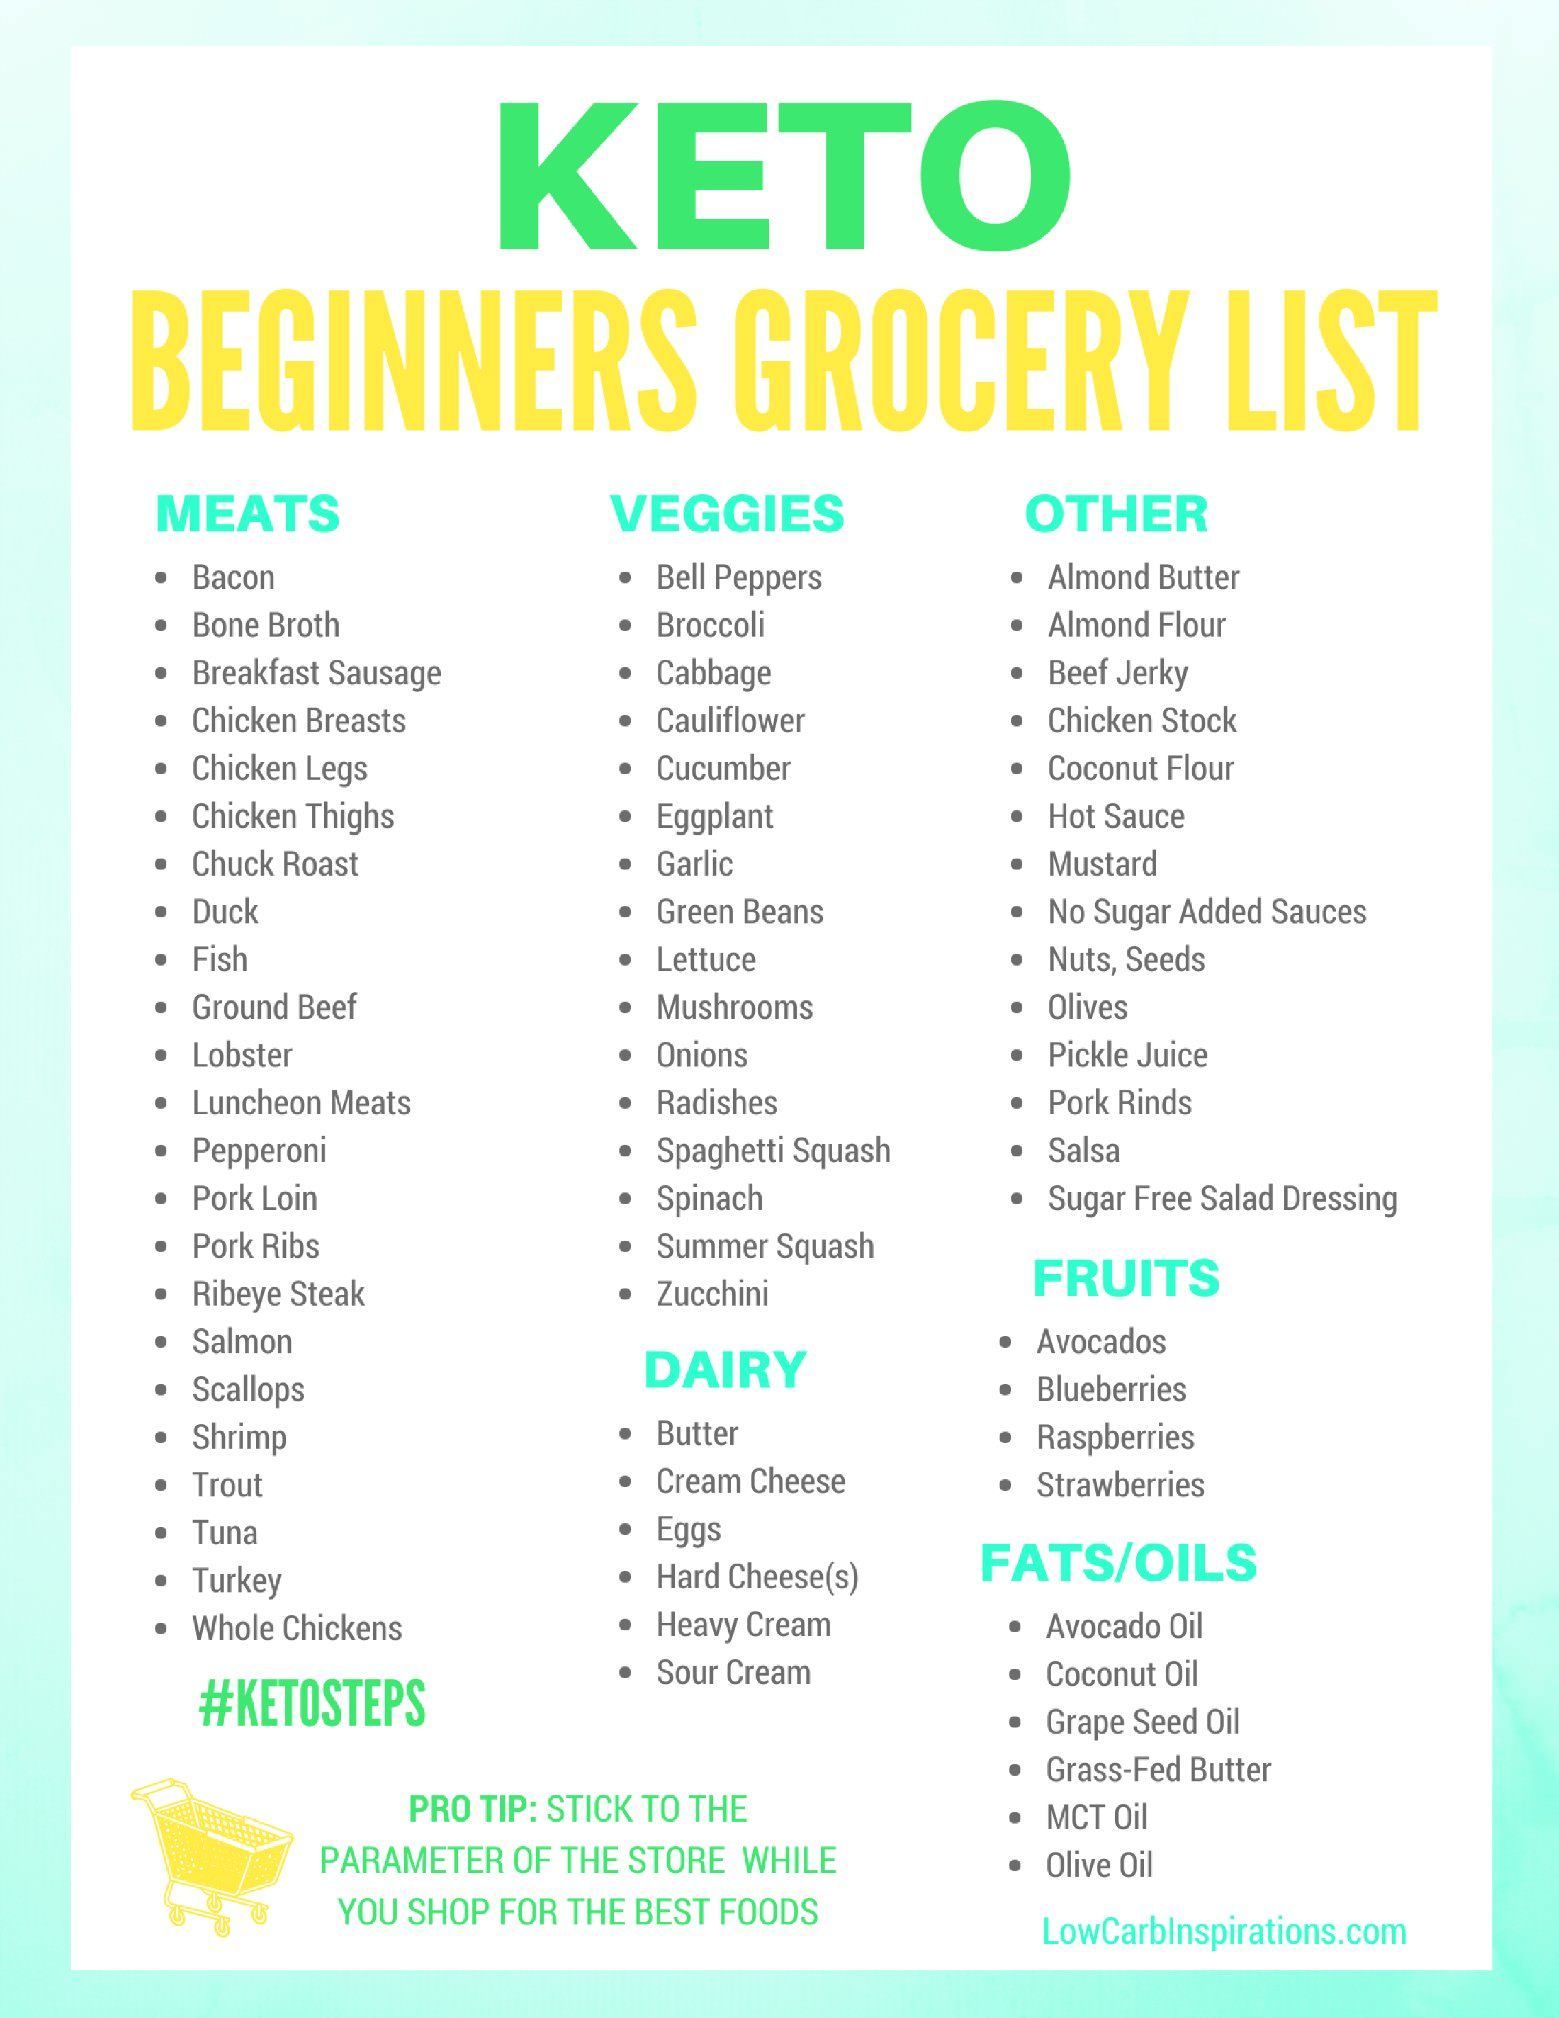 Keto Grocery List for Beginners -   20 paleo diet shopping list
 ideas